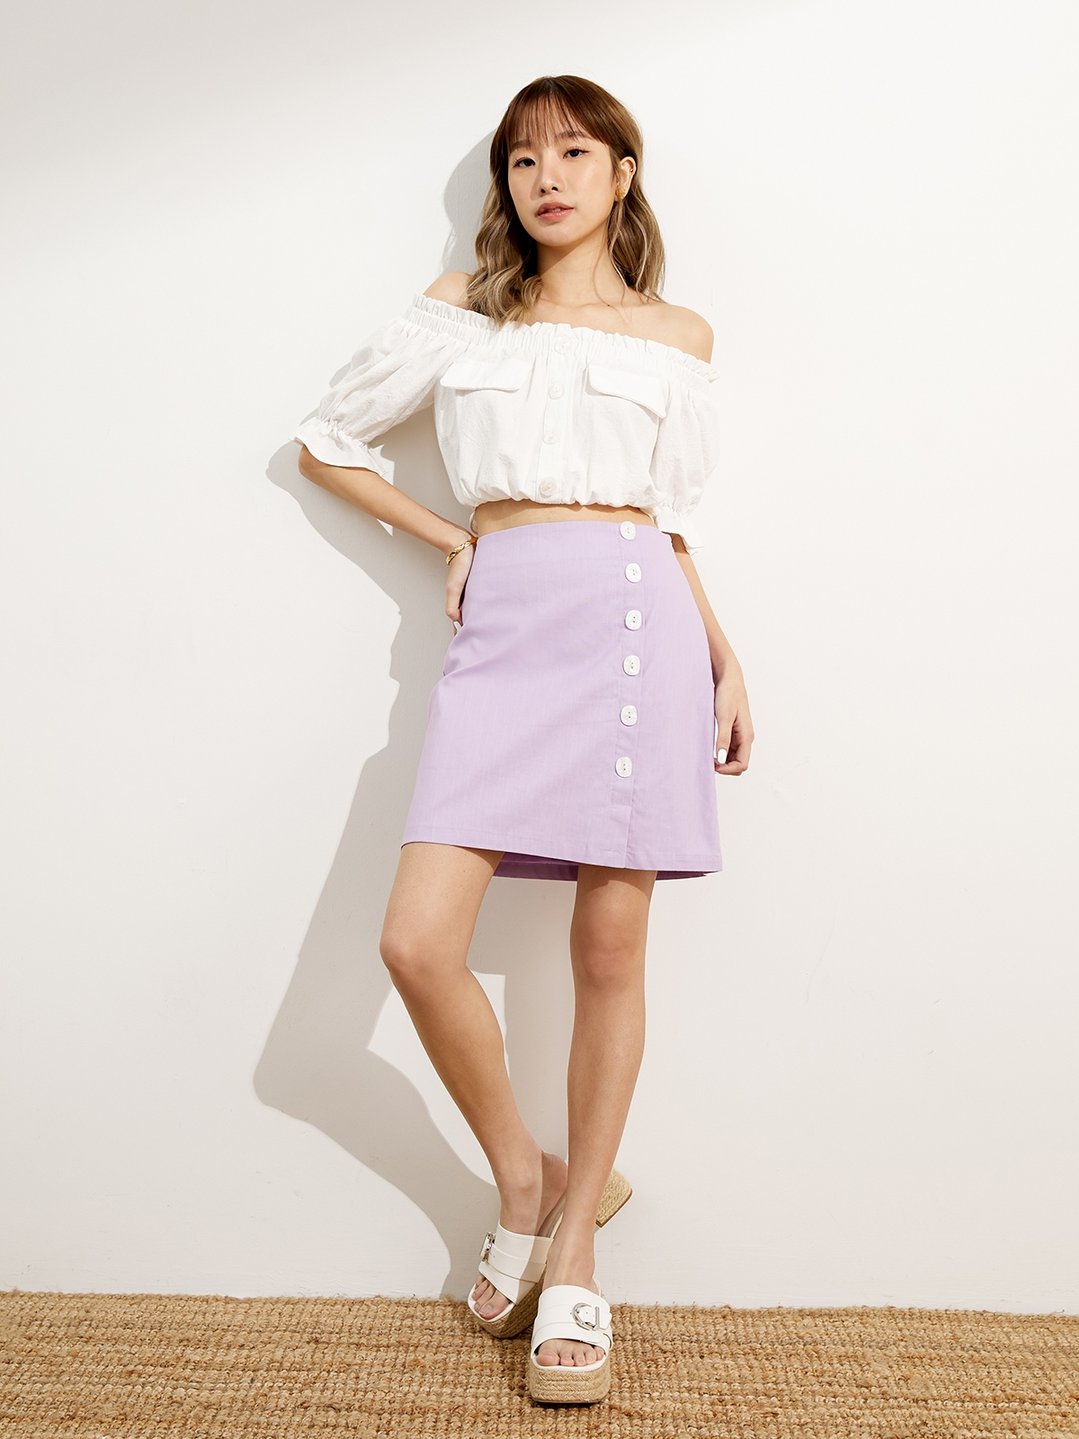 Sustainable Floral Side Slit Skirt - Purple - Pomelo Fashion